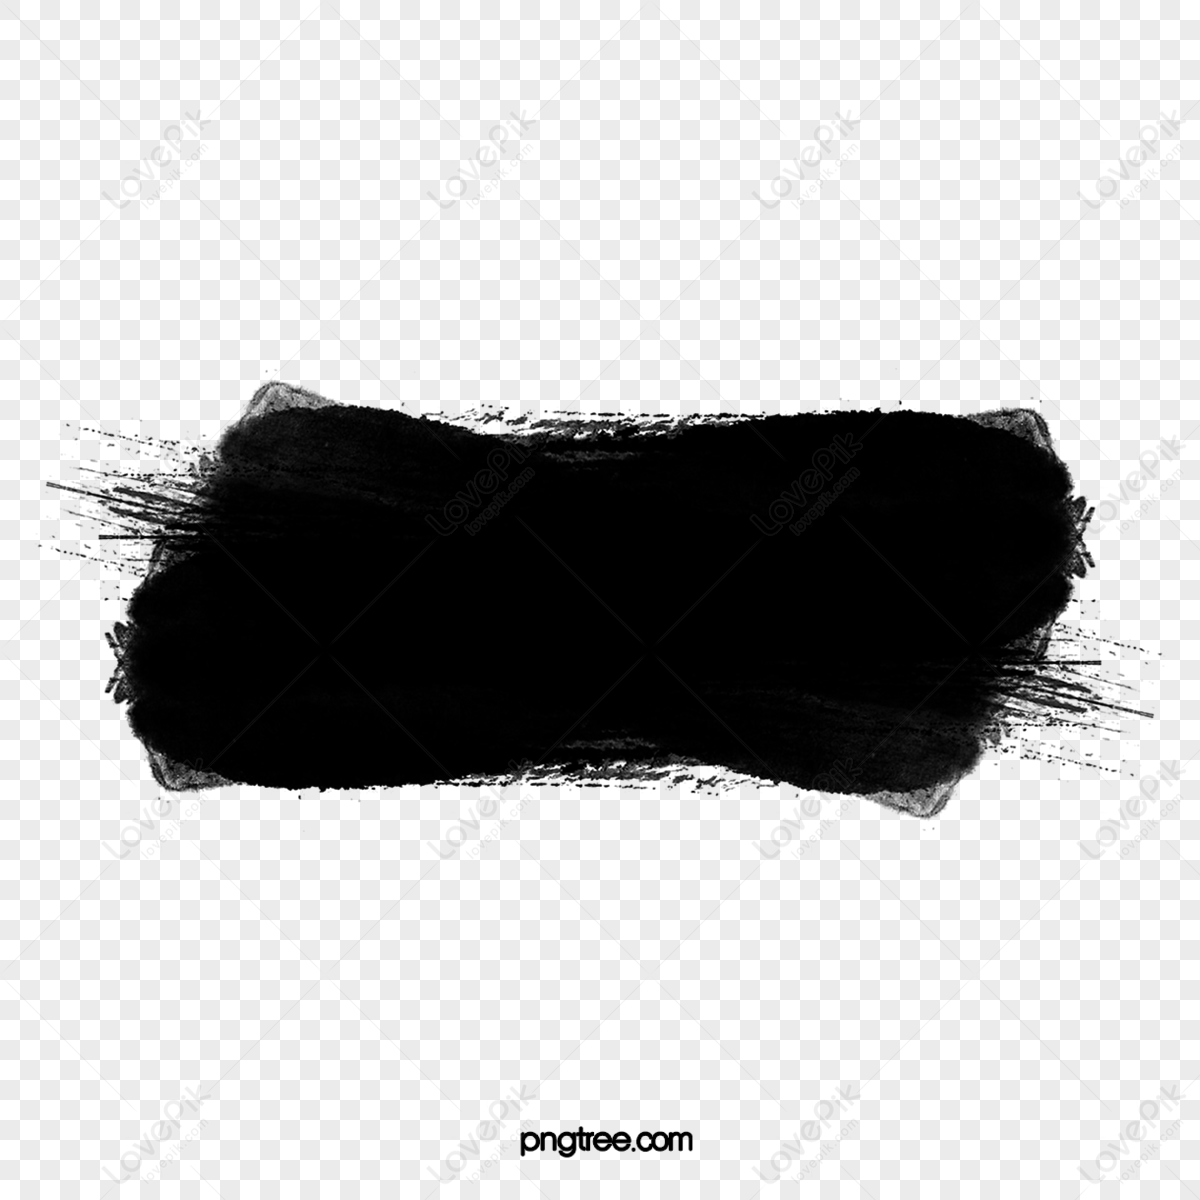 Black Paint PNG Transparent Images Free Download